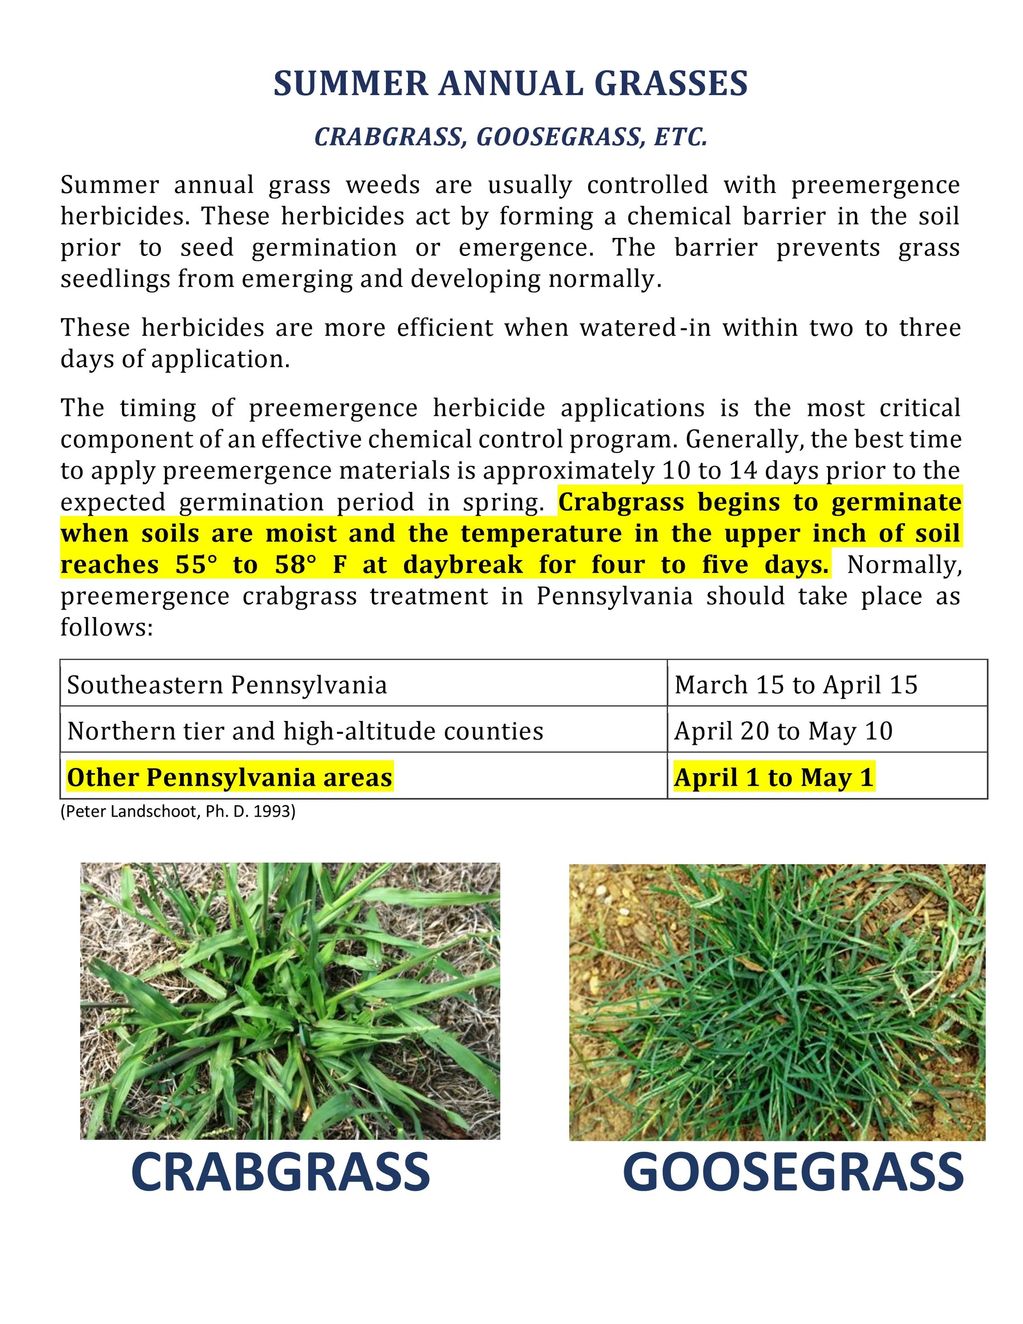 crabgrass goosegrass germination preemergent herbicide control application lawn care turf grass